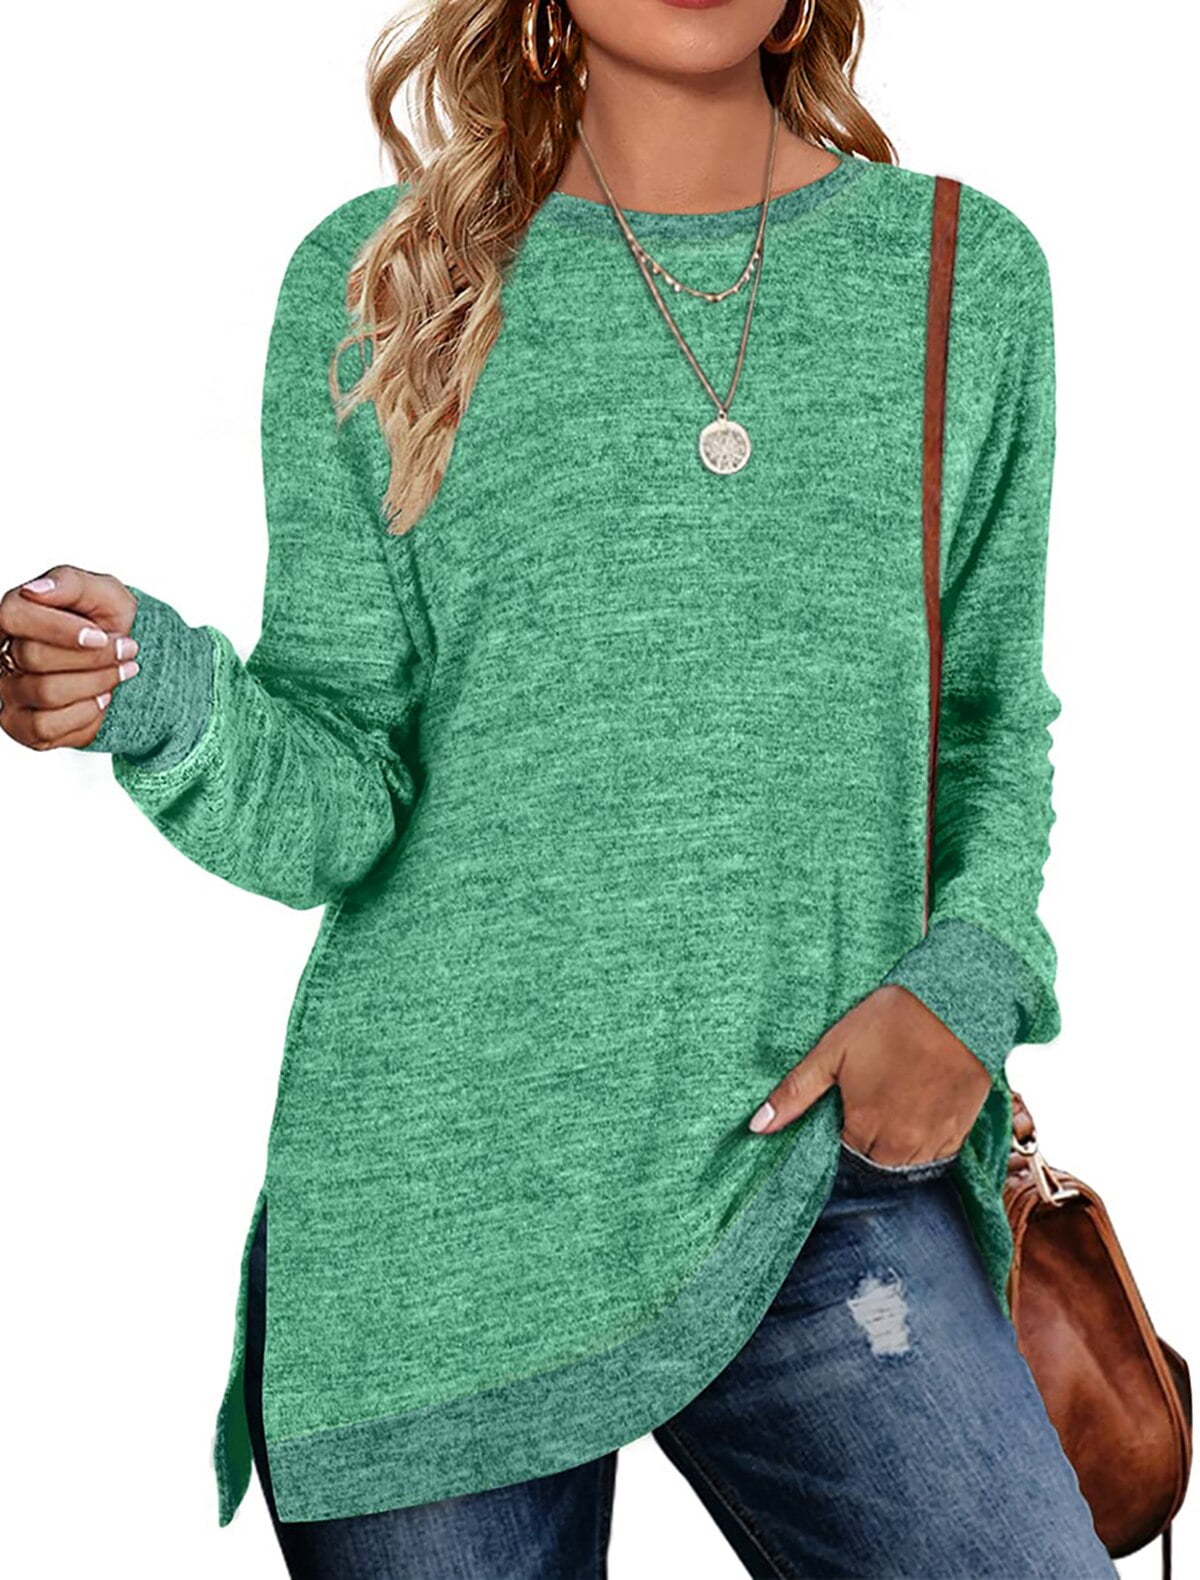  uhnmki Womens Tunic Tops Sweatshirt Graphic Color